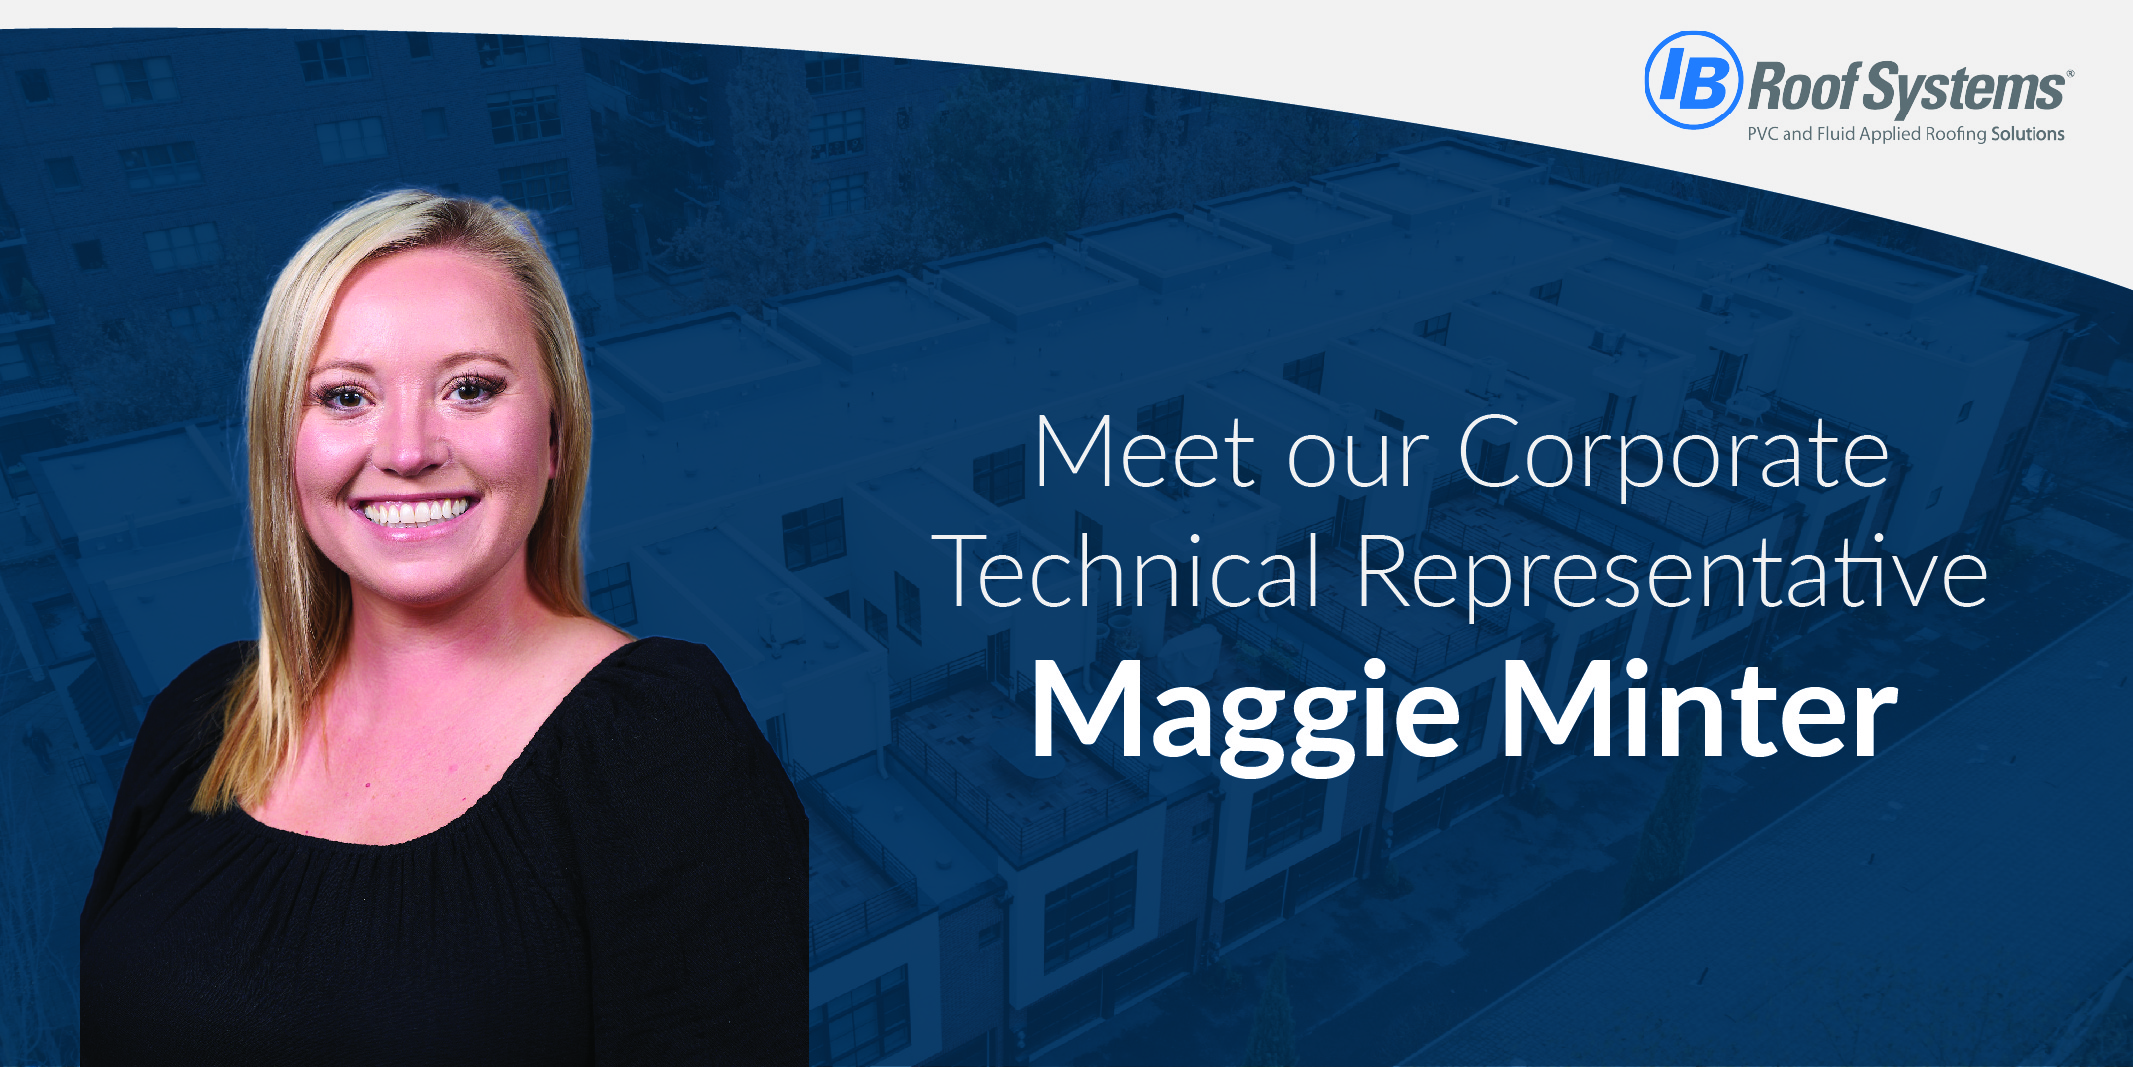 Meet our Corporate Technical Representative Maggie Minter